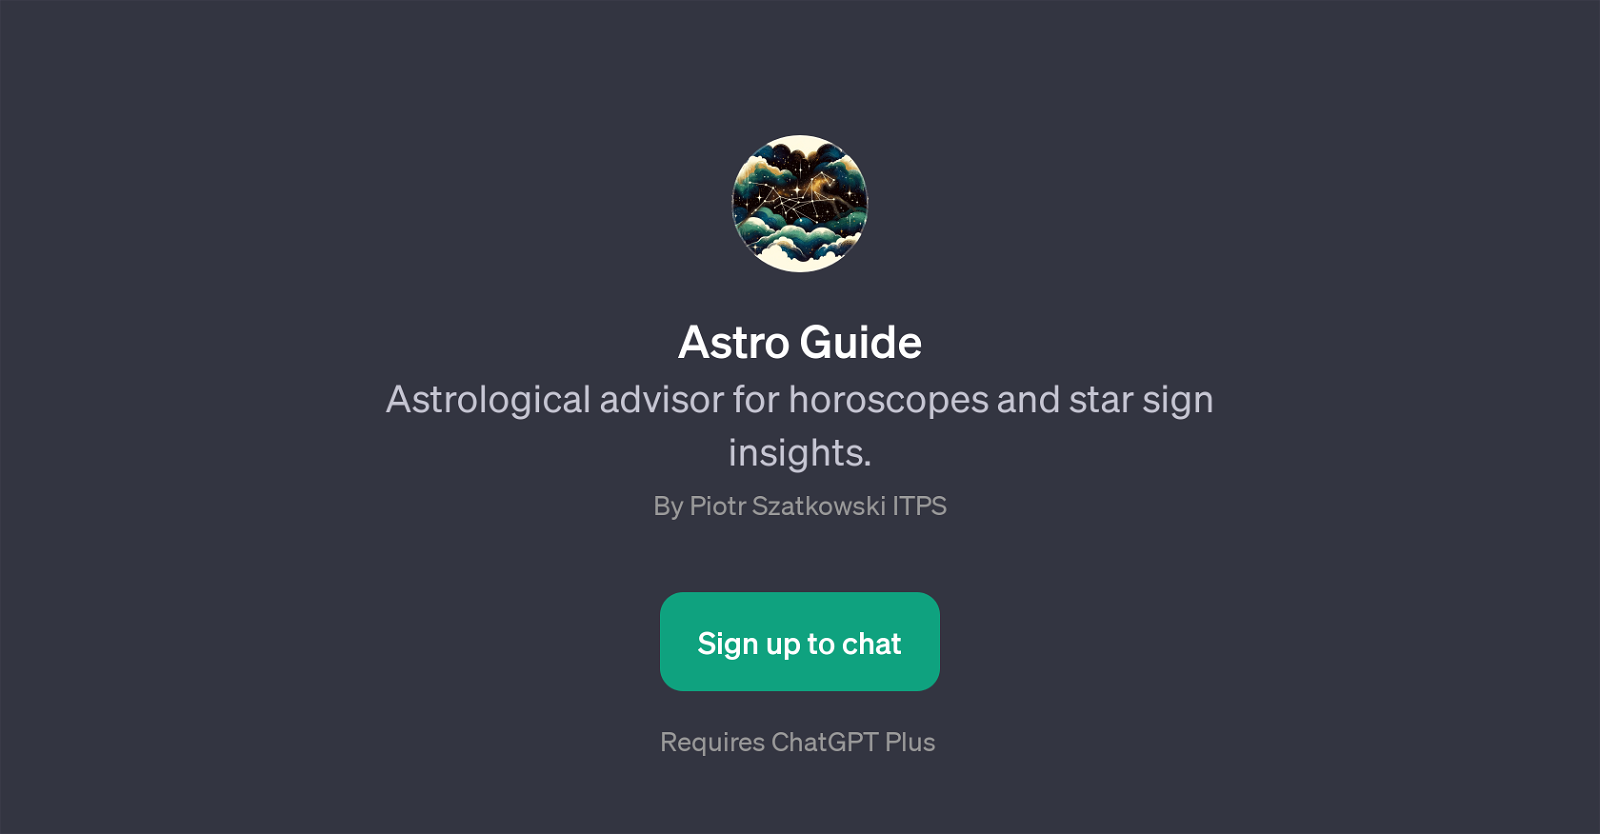 Astro Guide website